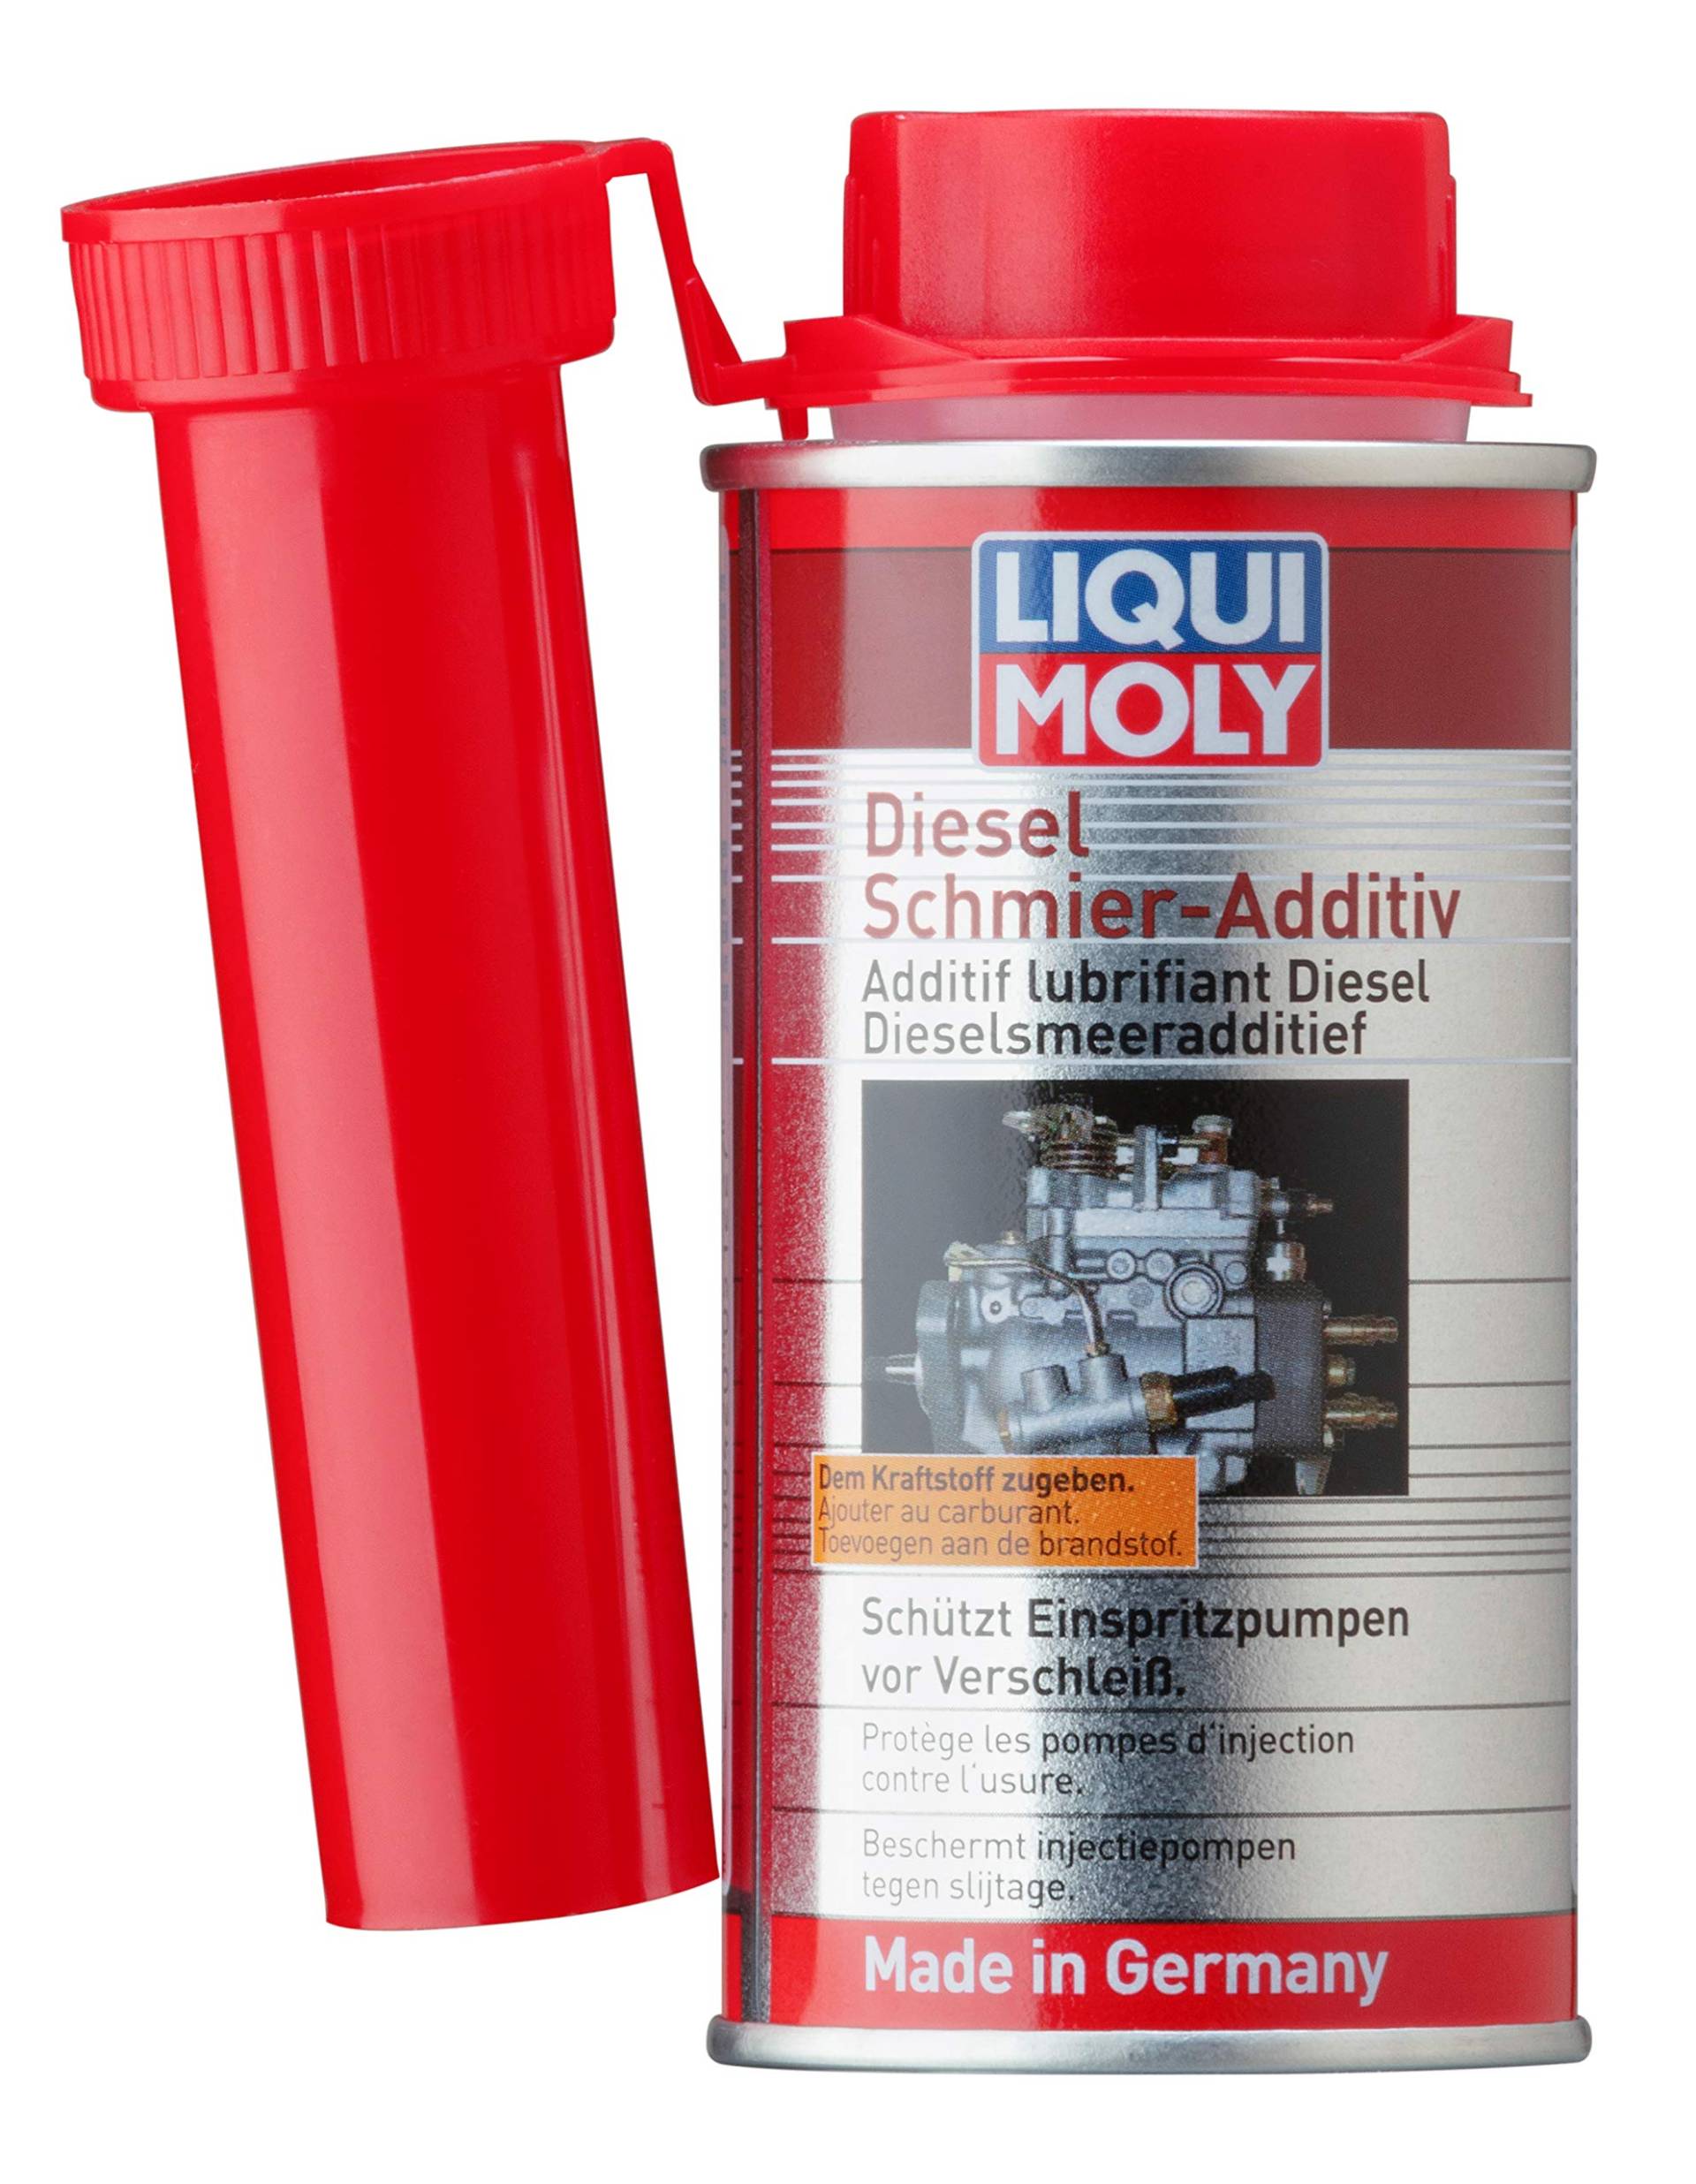 LIQUI MOLY Diesel-Schmieradditiv | 150 ml | Dieseladditiv | Art.-Nr.: 5122 von Liqui Moly